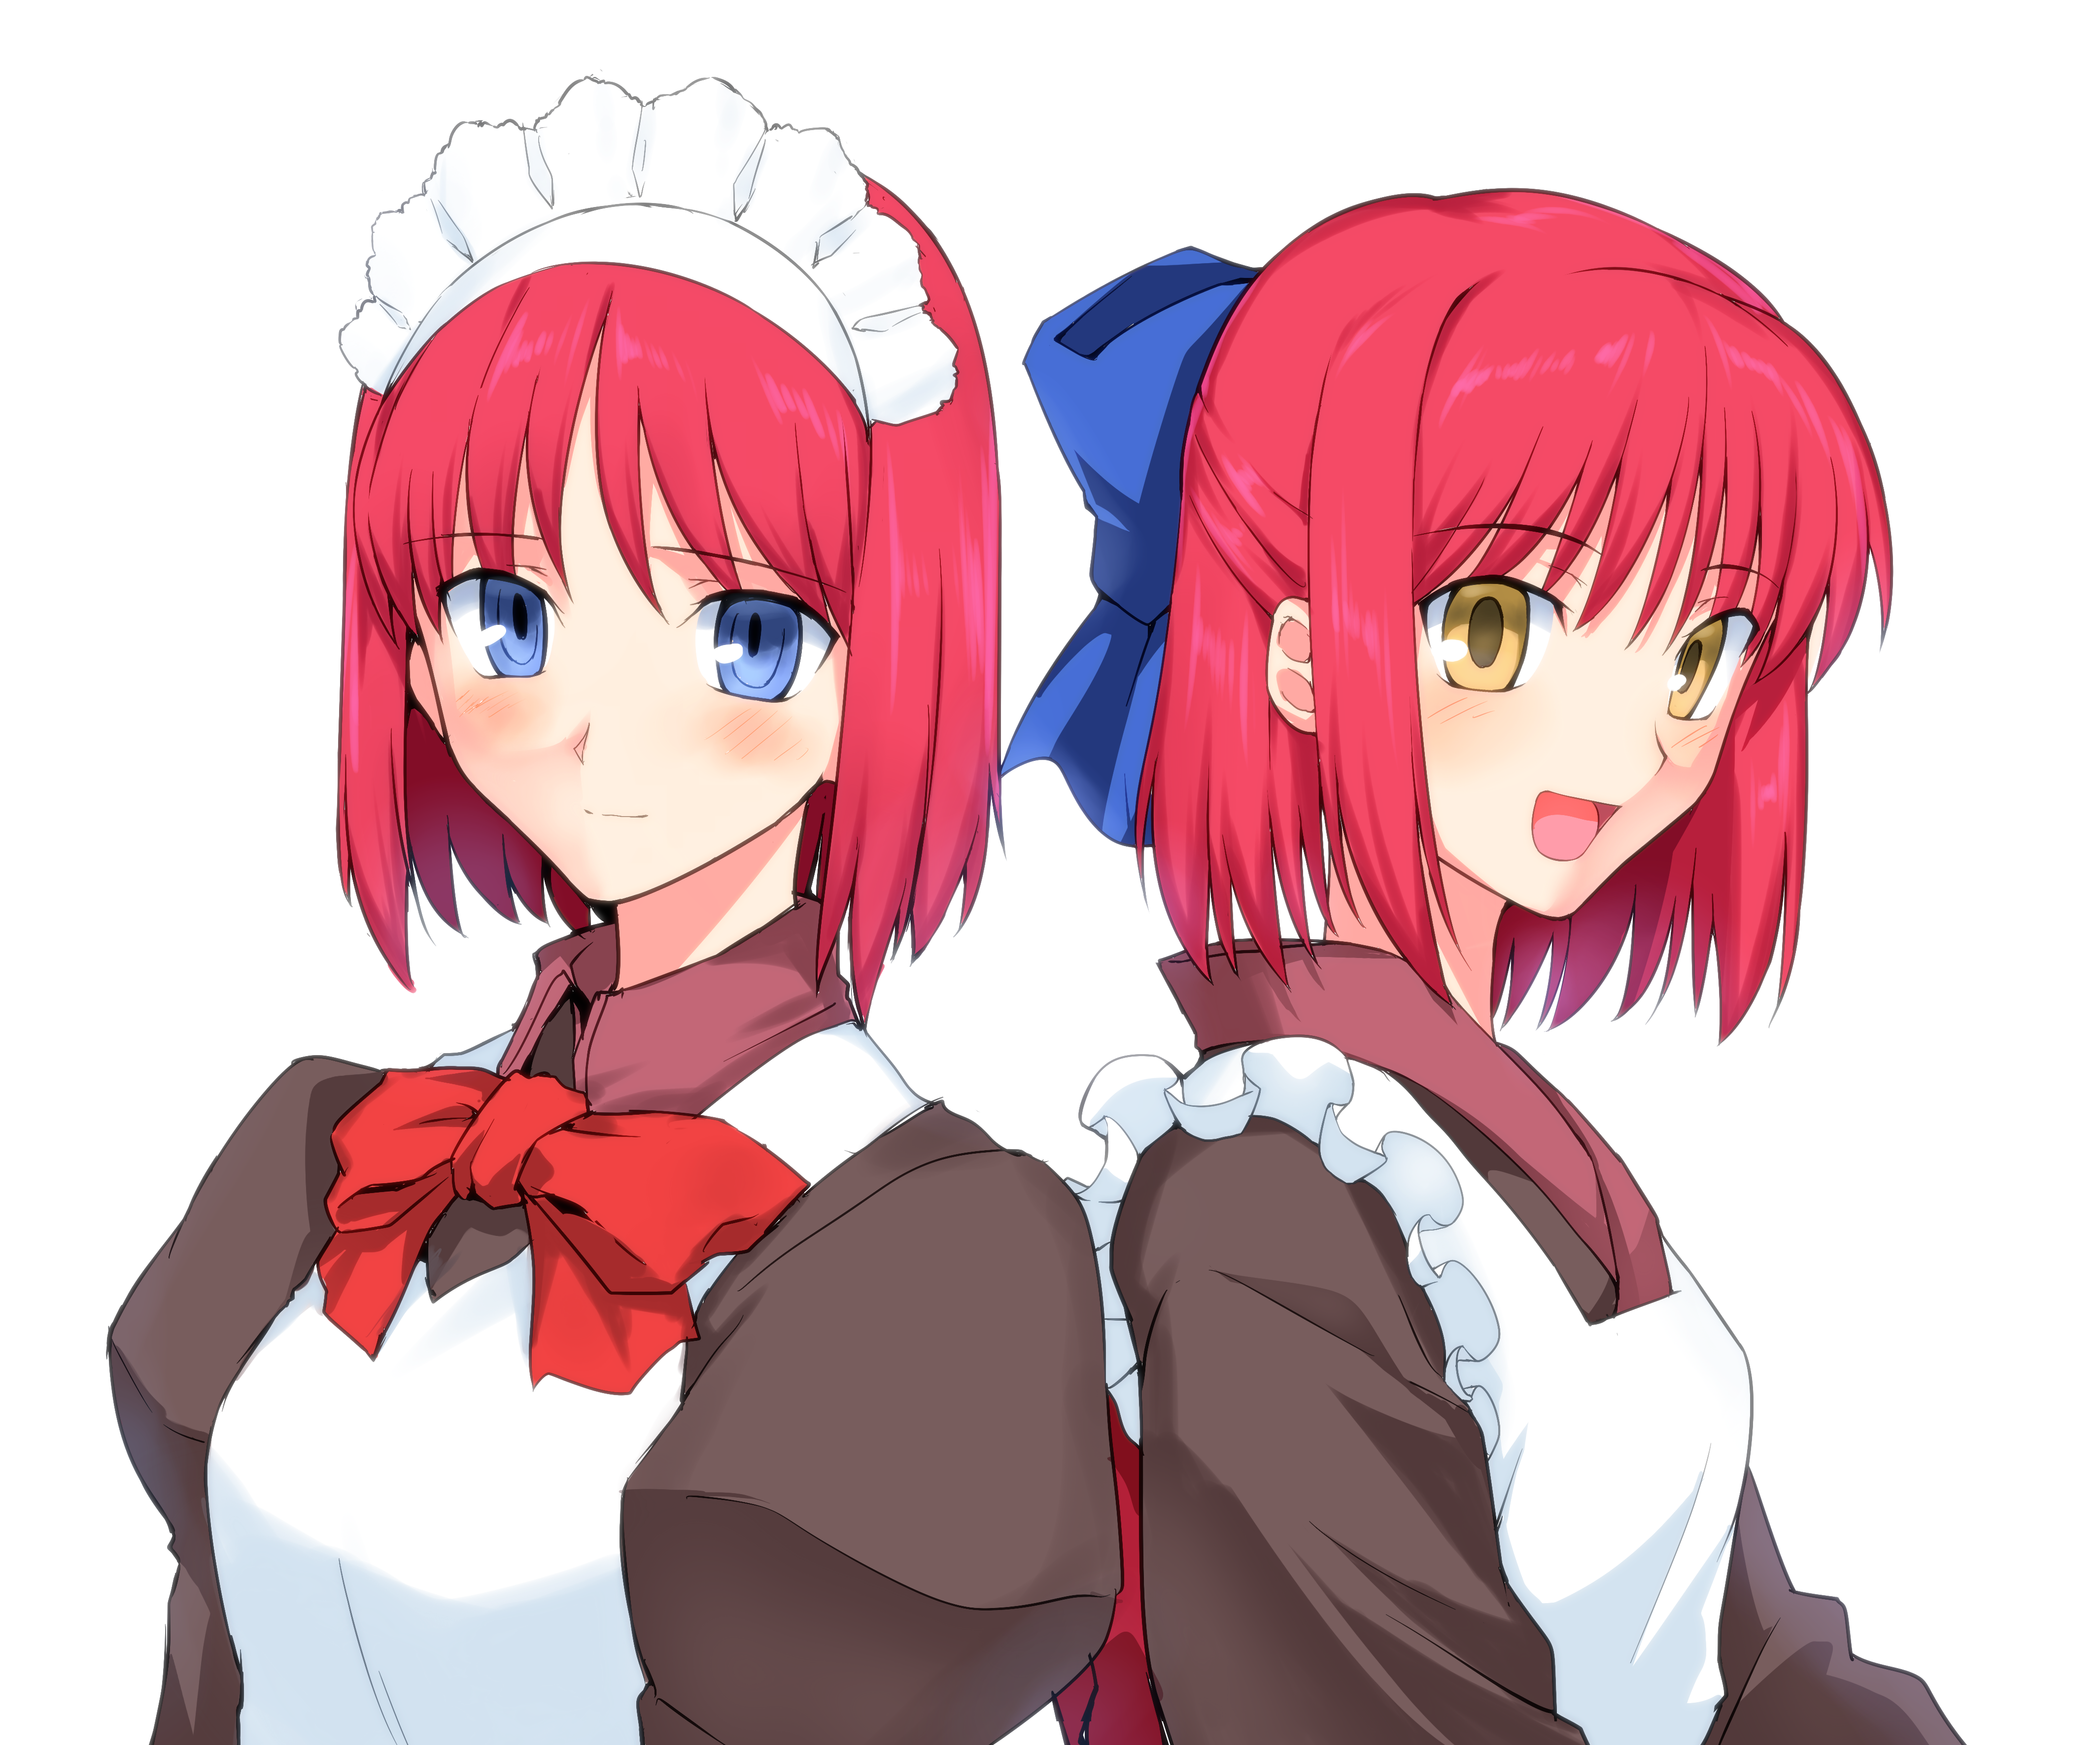 Anime 4261x3541 anime anime girls Tsukihime Kohaku (Tsukihime) Hisui (Tsukihime) short hair twins two women artwork digital art fan art redhead maid maid outfit